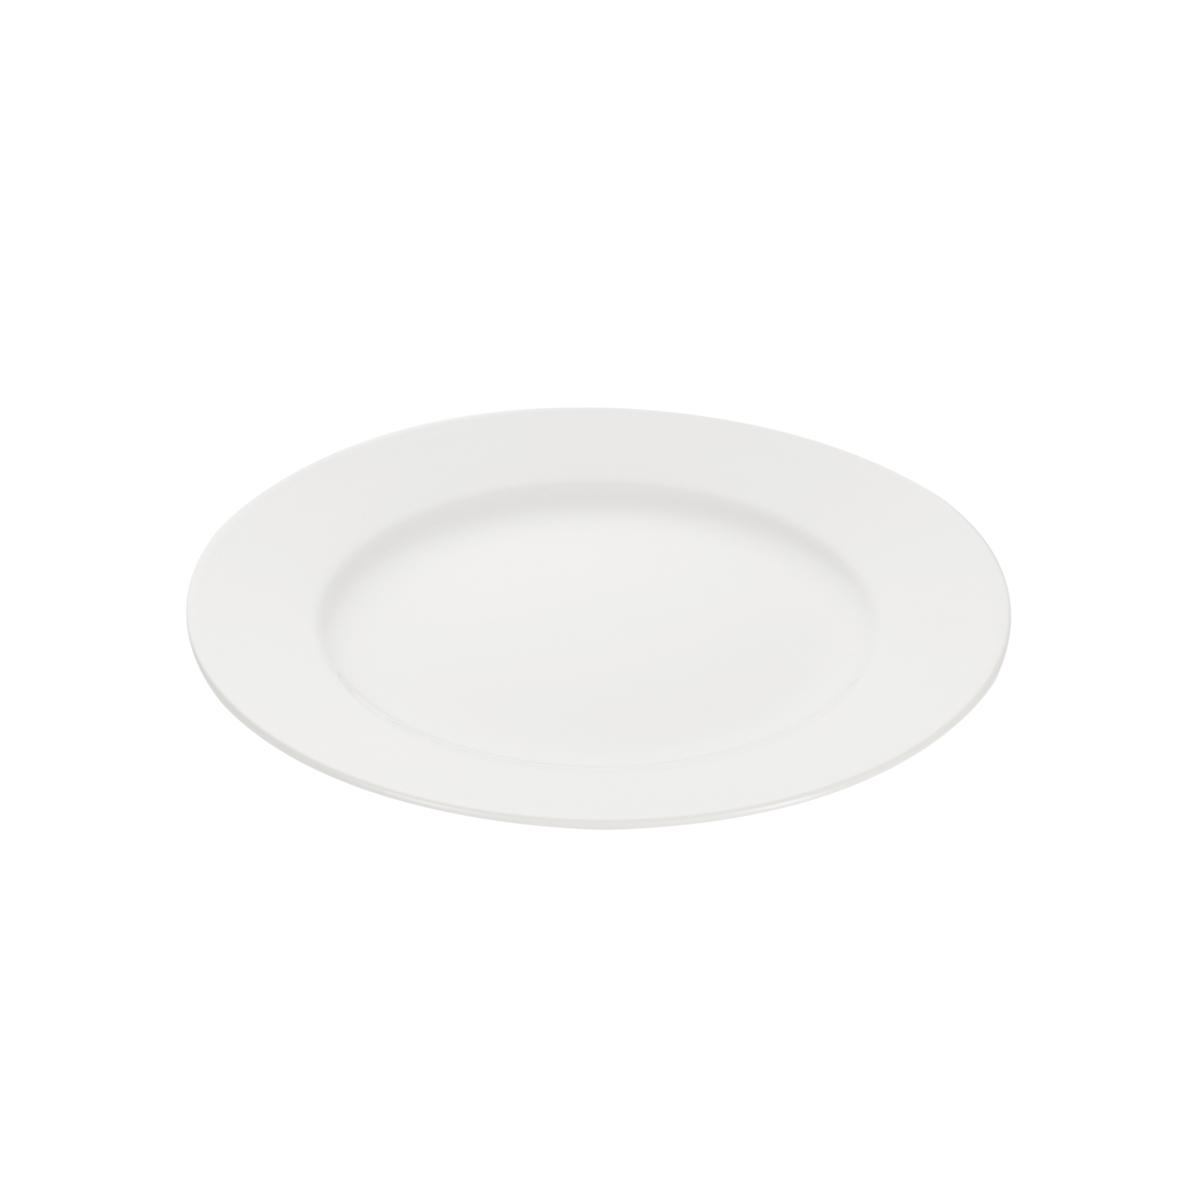 Плоская тарелка Gipfel Classique 50906 27 см плоская тарелка gipfel classique 50906 27 см